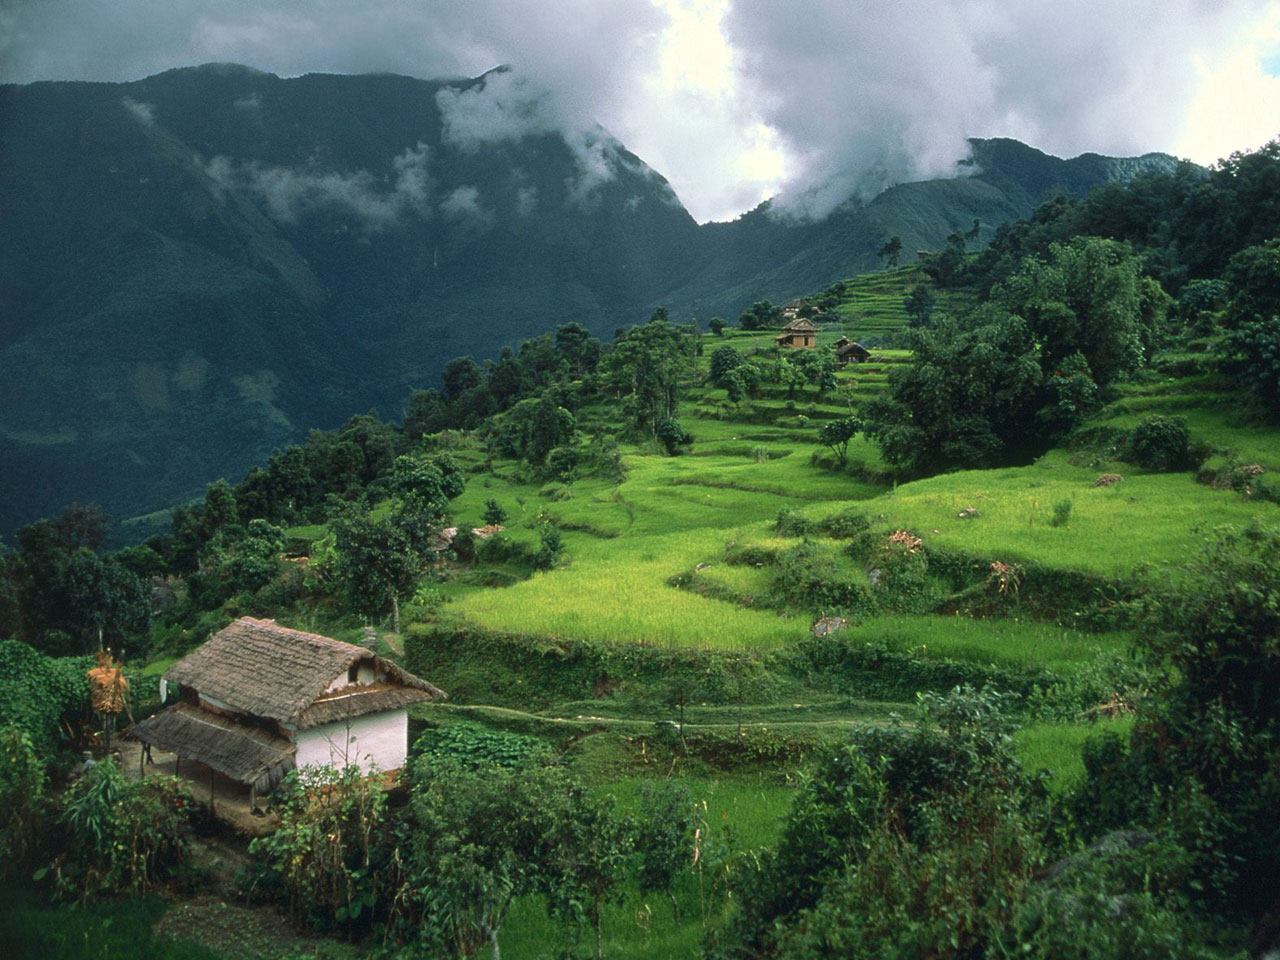 https://blogger.googleusercontent.com/img/b/R29vZ2xl/AVvXsEiwCAsd1MM3vB2kGhW9jj33WbP9P3Y9bUMpSiRNO17QNlbychb5a8NWSfS8LGrpWtgULoWgO4EO4F51JWJJ5sRU2rXrcHDBn51lkqp3vuJLFghecxghhKIuxfEUnKyF0q5WIH_HbMujRRo/s1600/Arun_River_Region_Nepal.jpg